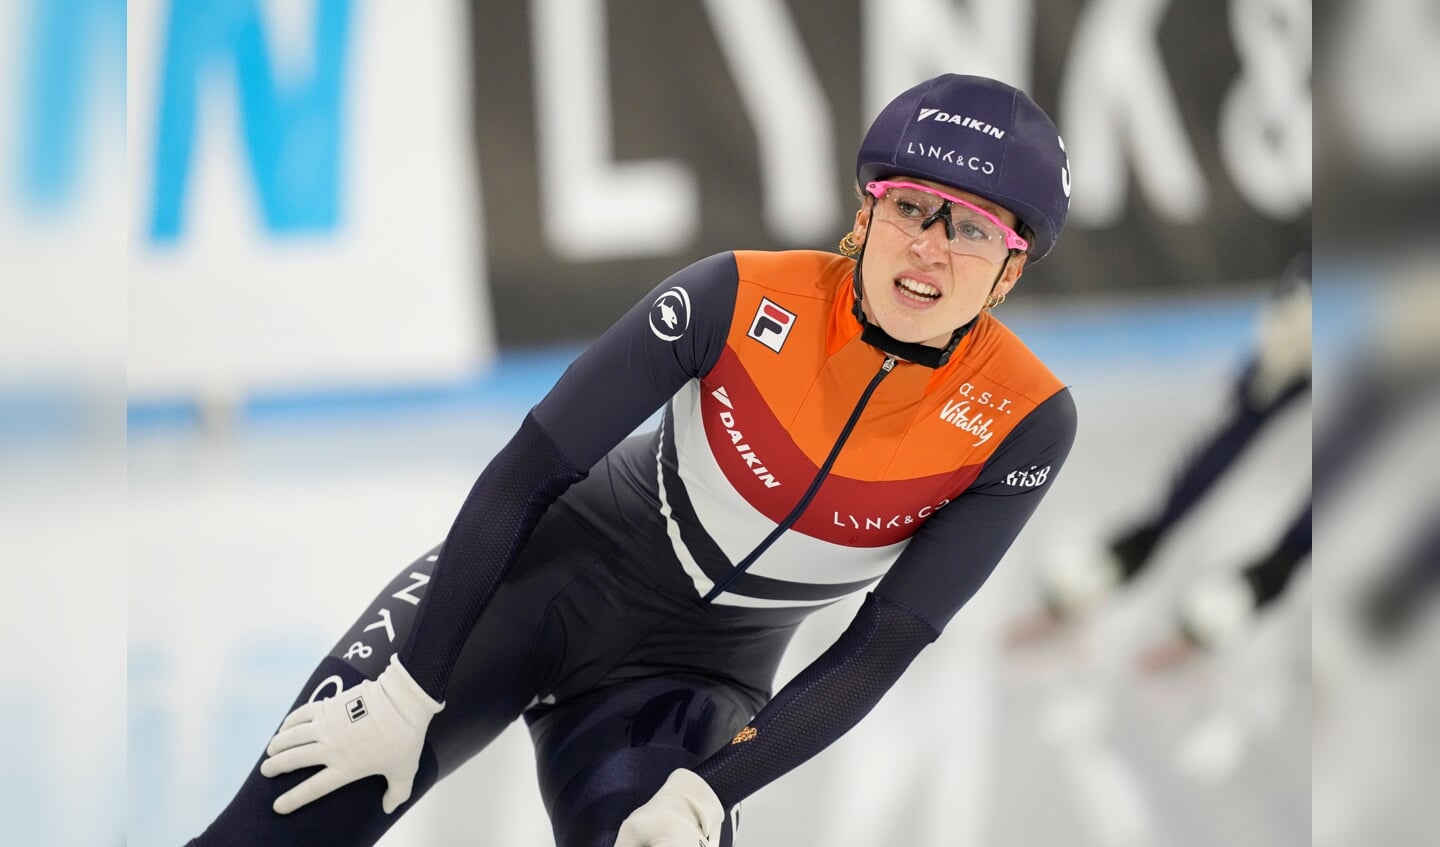 Thialf - Heerenveen
Invitation cup
Suzanne Schulting wint de 1500 en 500 mtr.